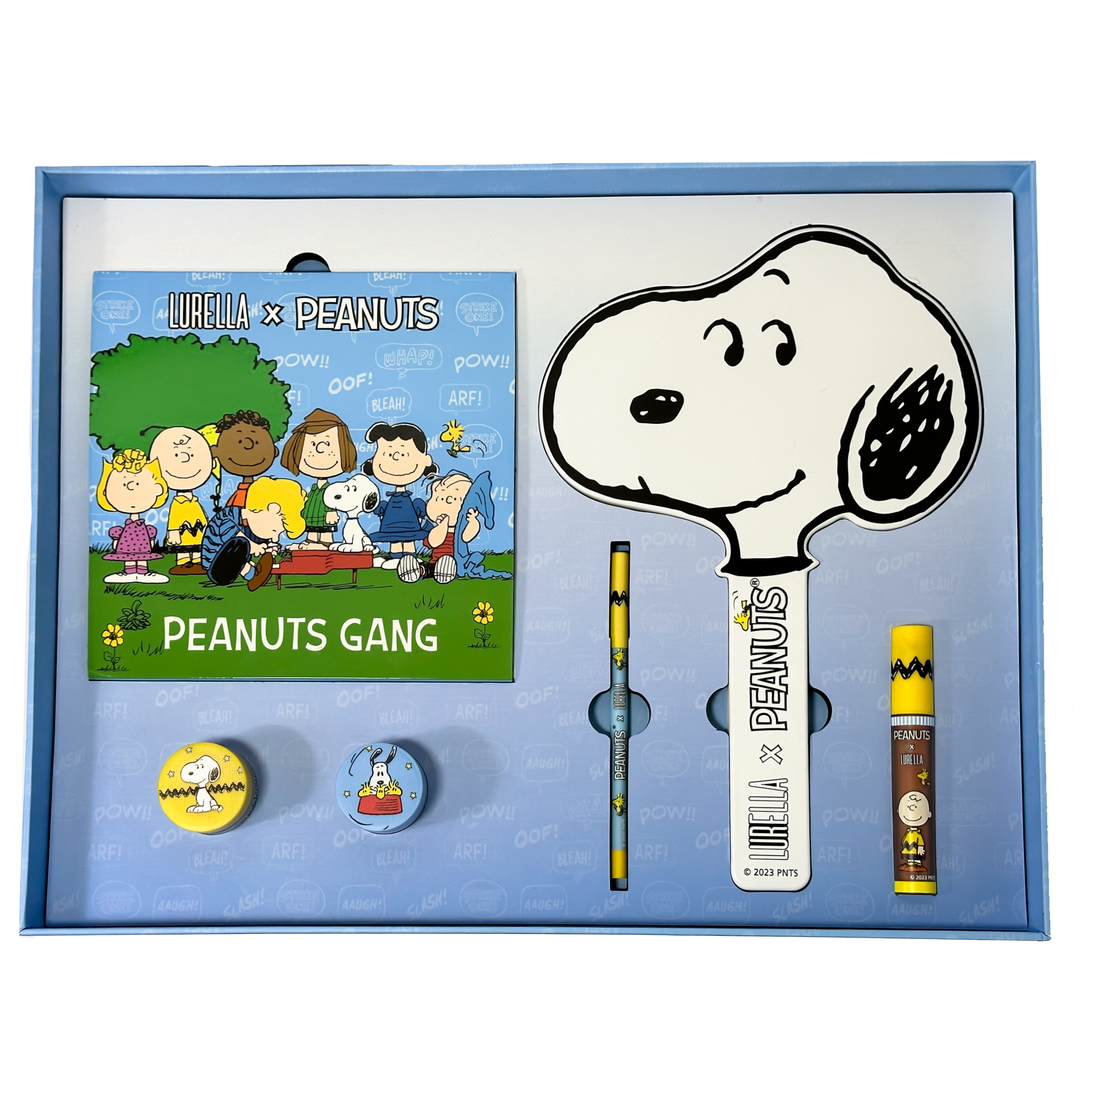 Lurella x Peanuts PR Box Collection  (Snoopy Mirror)